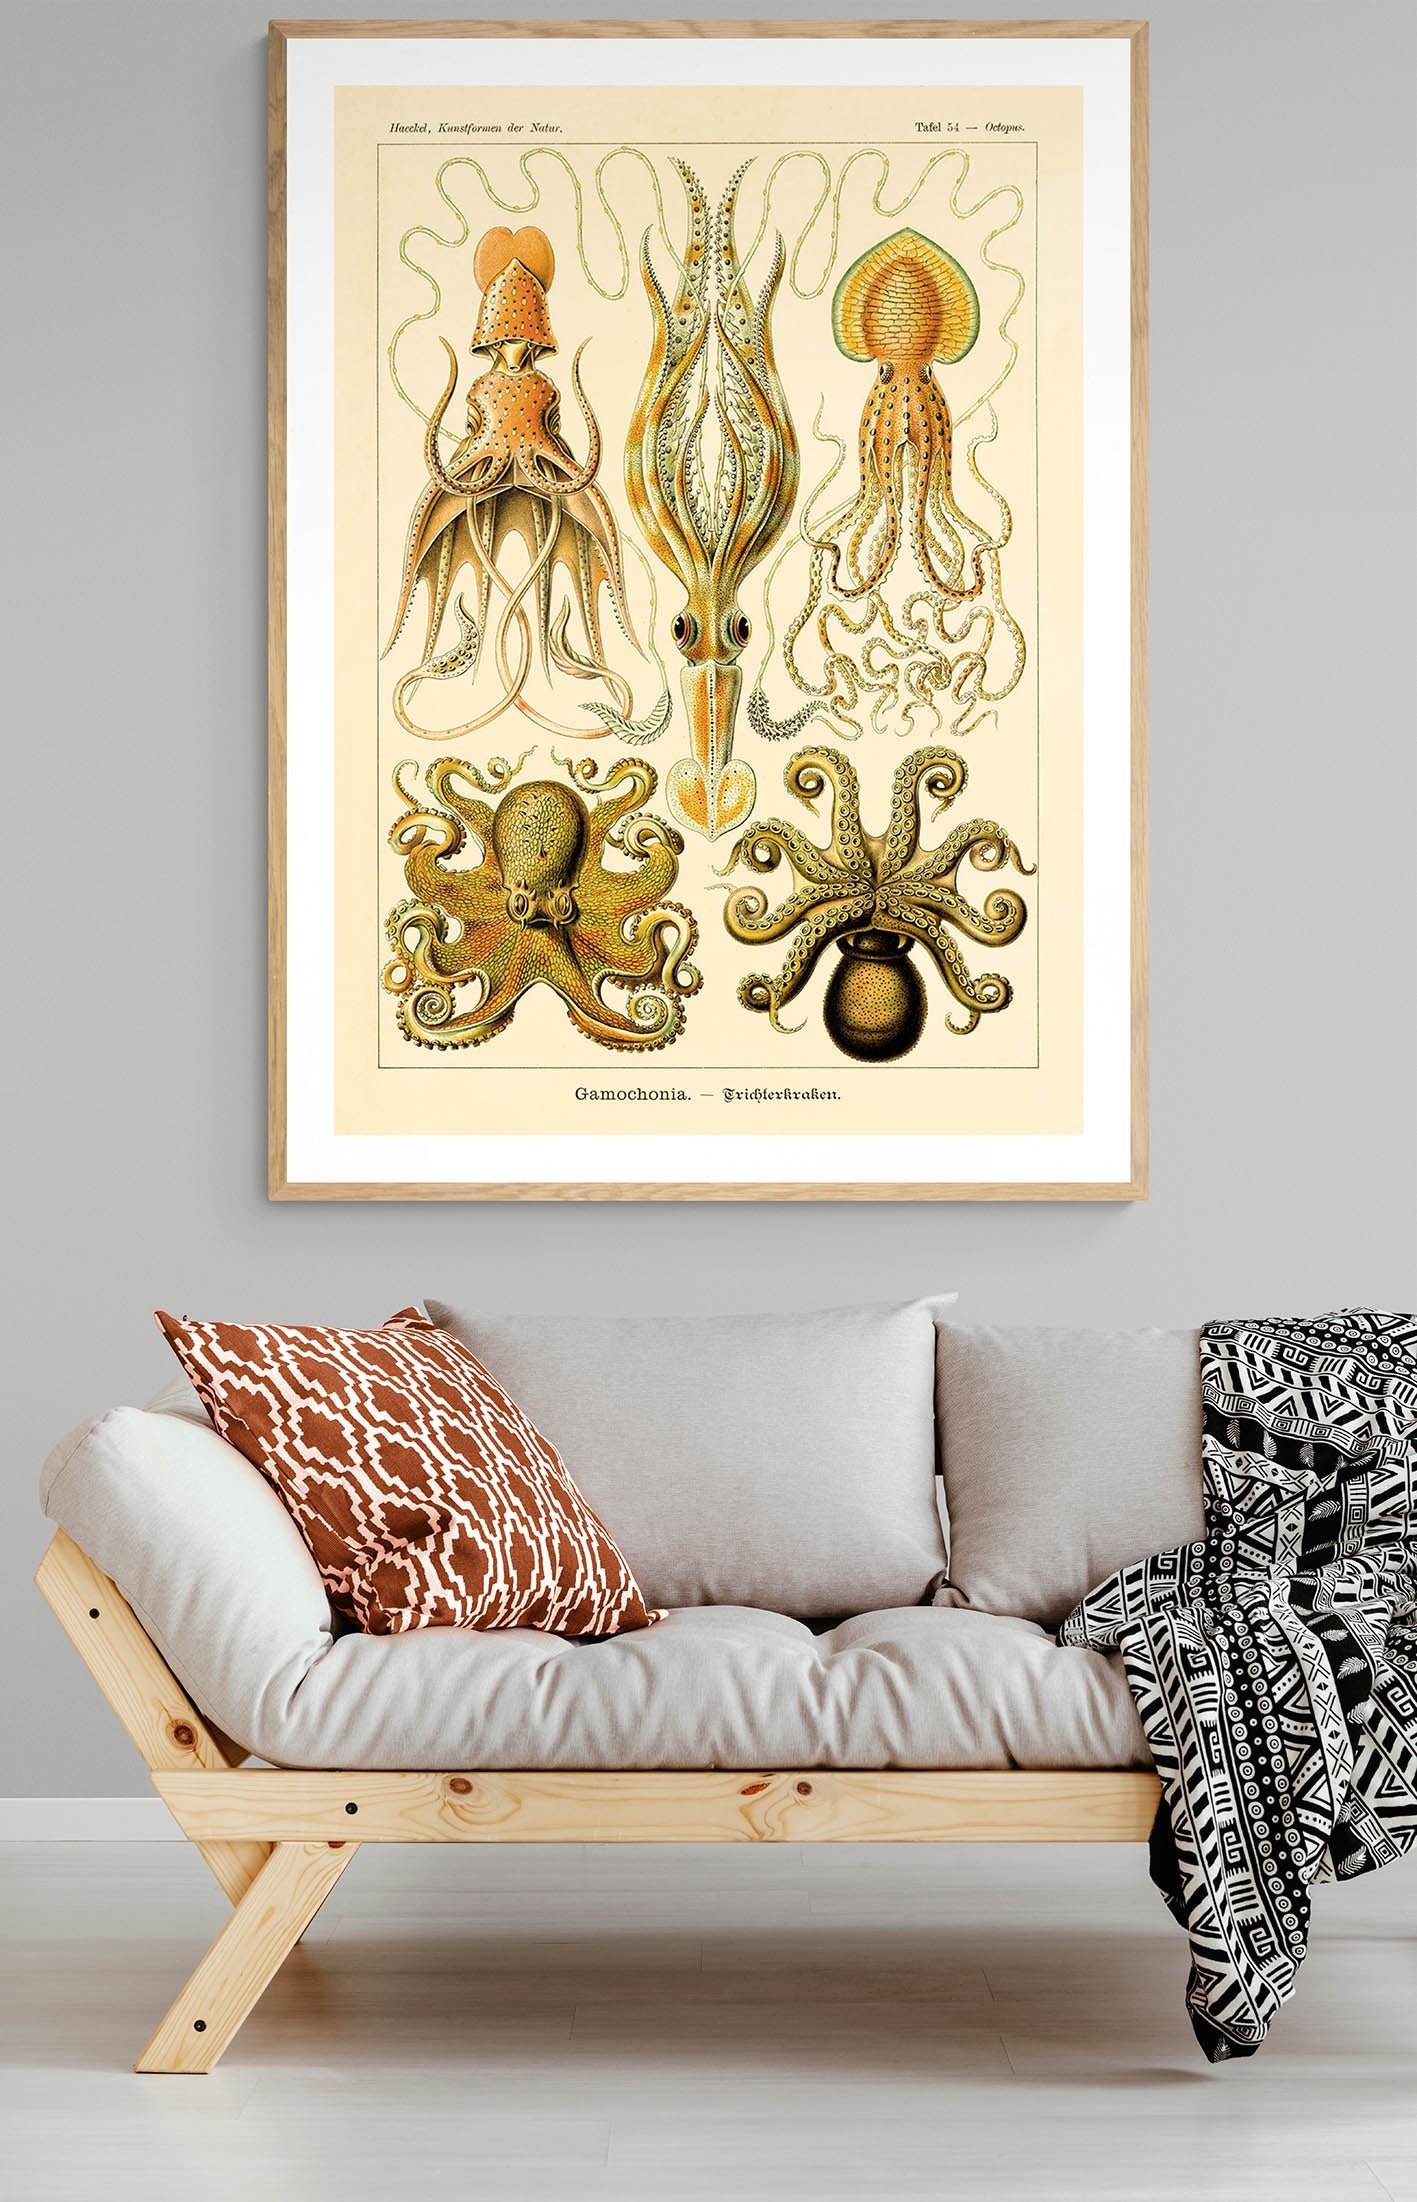 Ernst Haeckel Wall Art - Gamochonia by Ernst Haeckel Poster